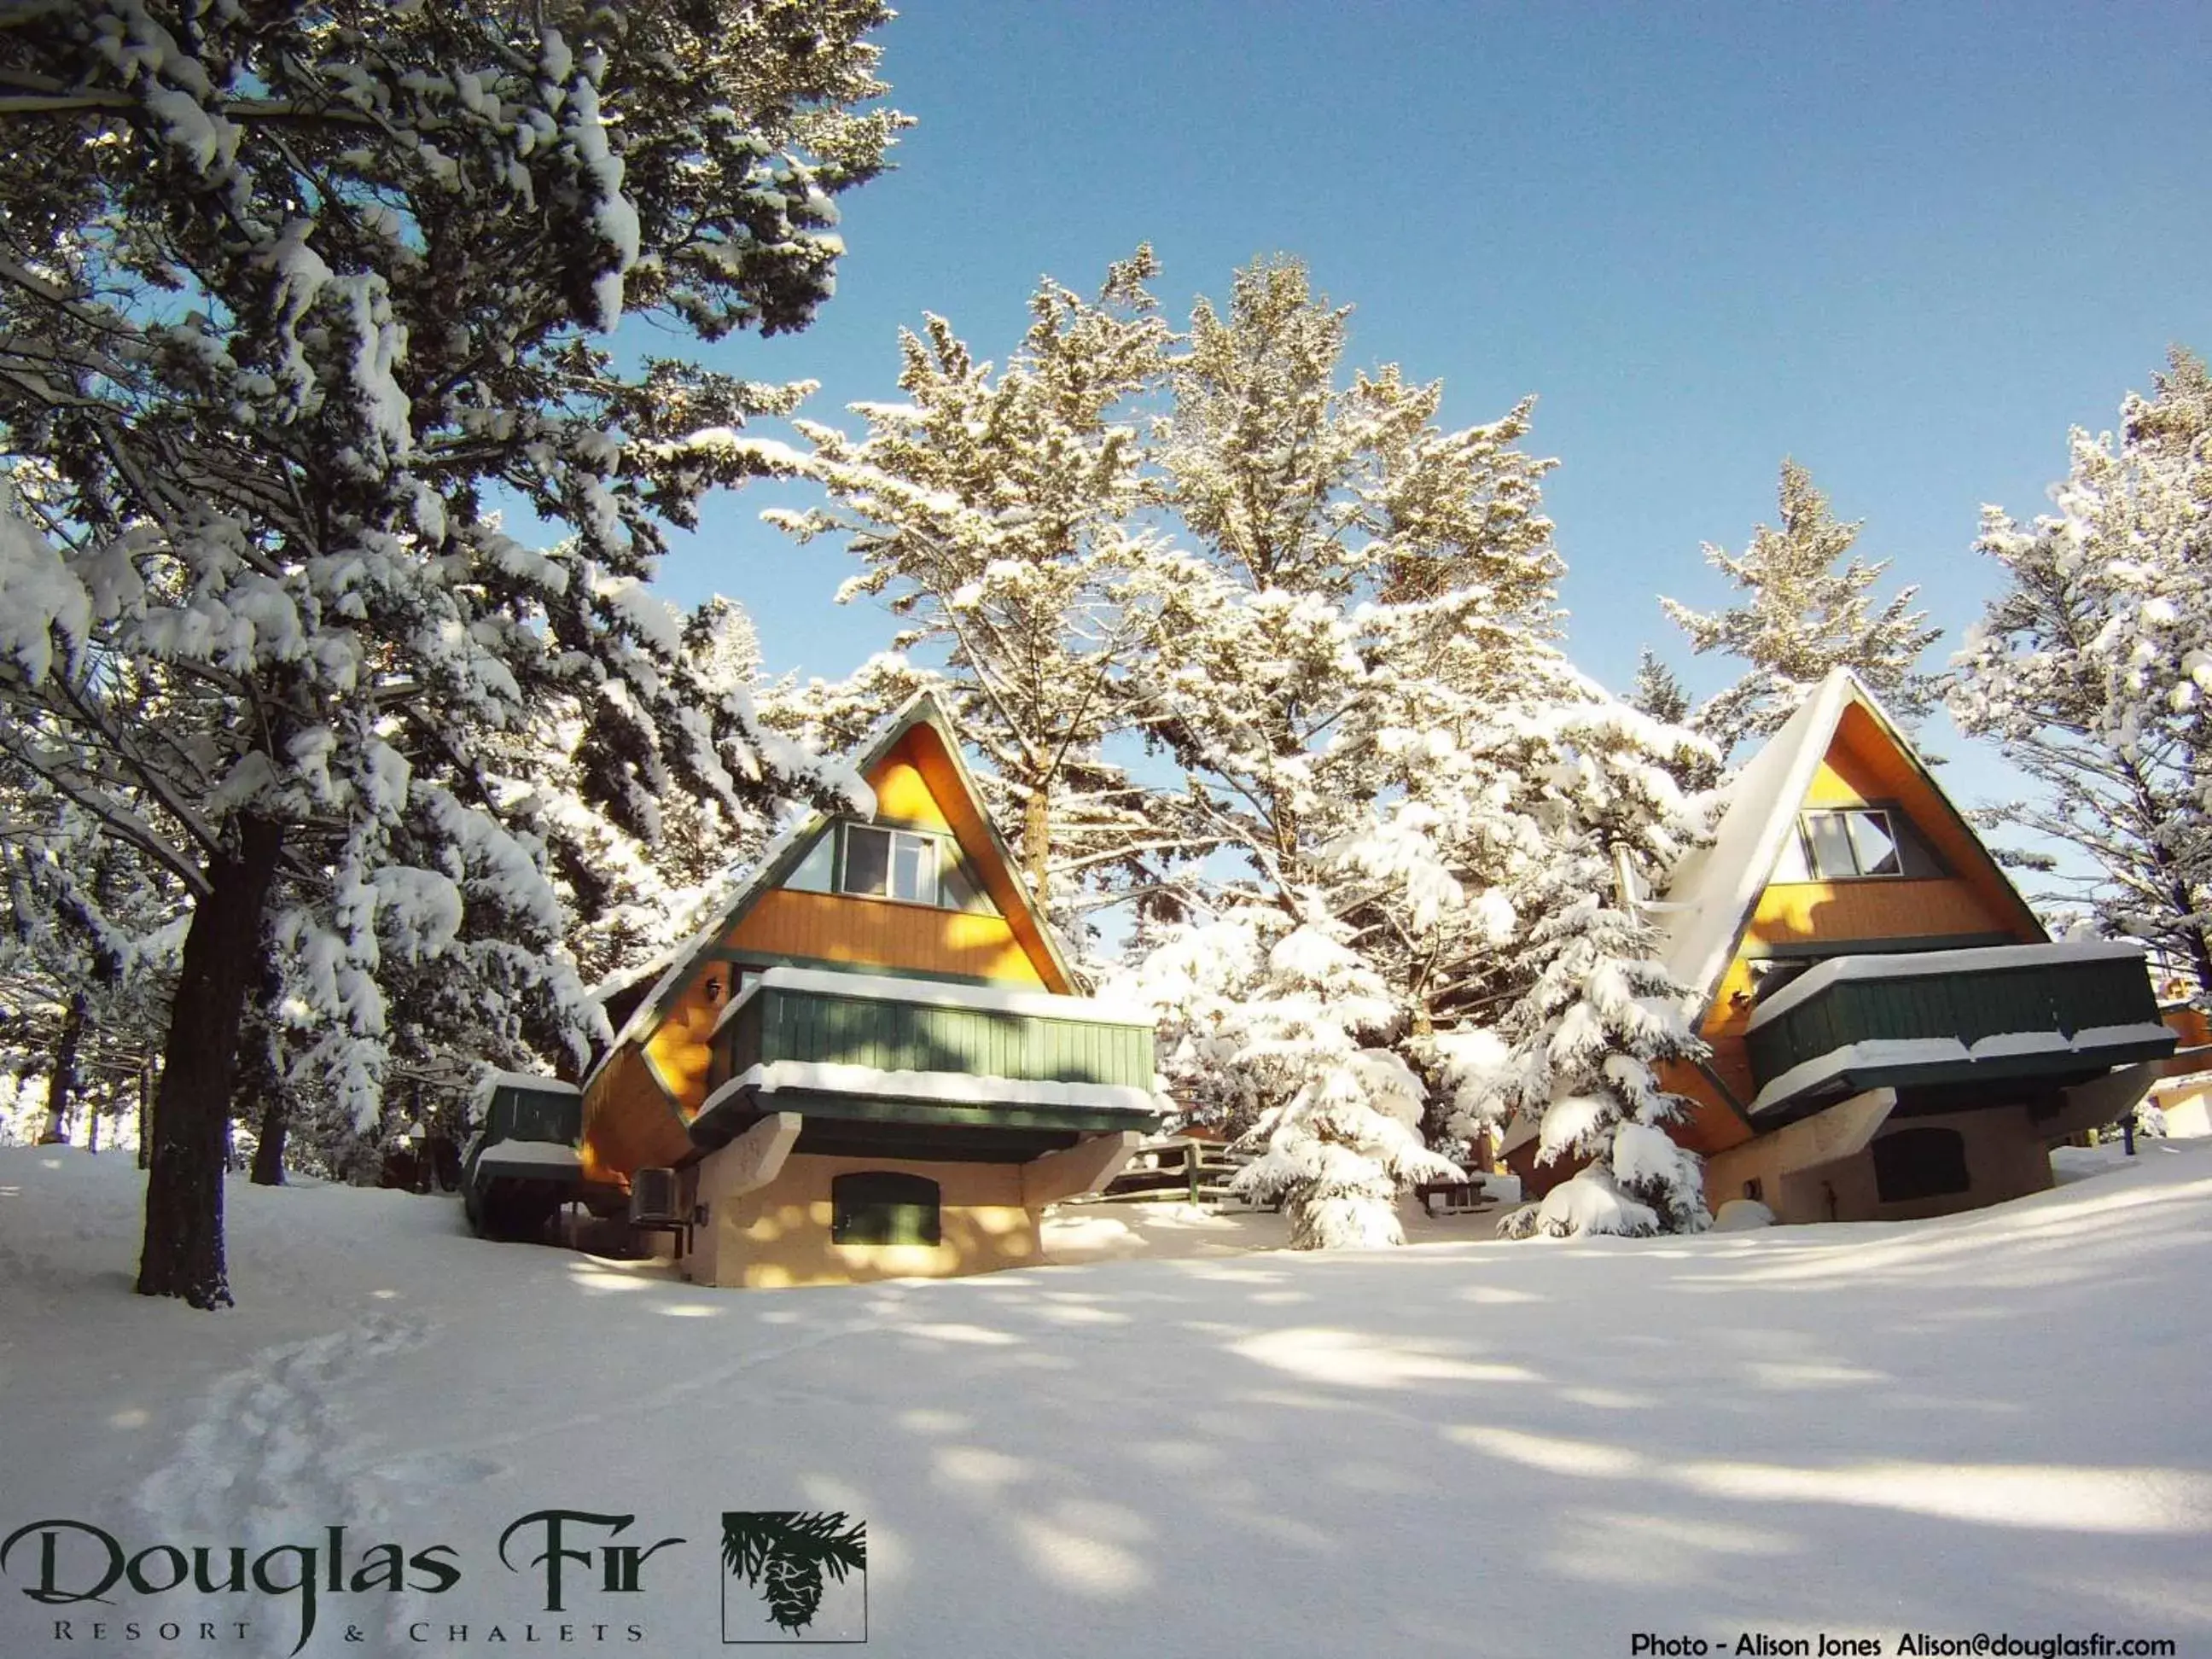 Facade/entrance, Winter in Douglas Fir Resort & Chalets